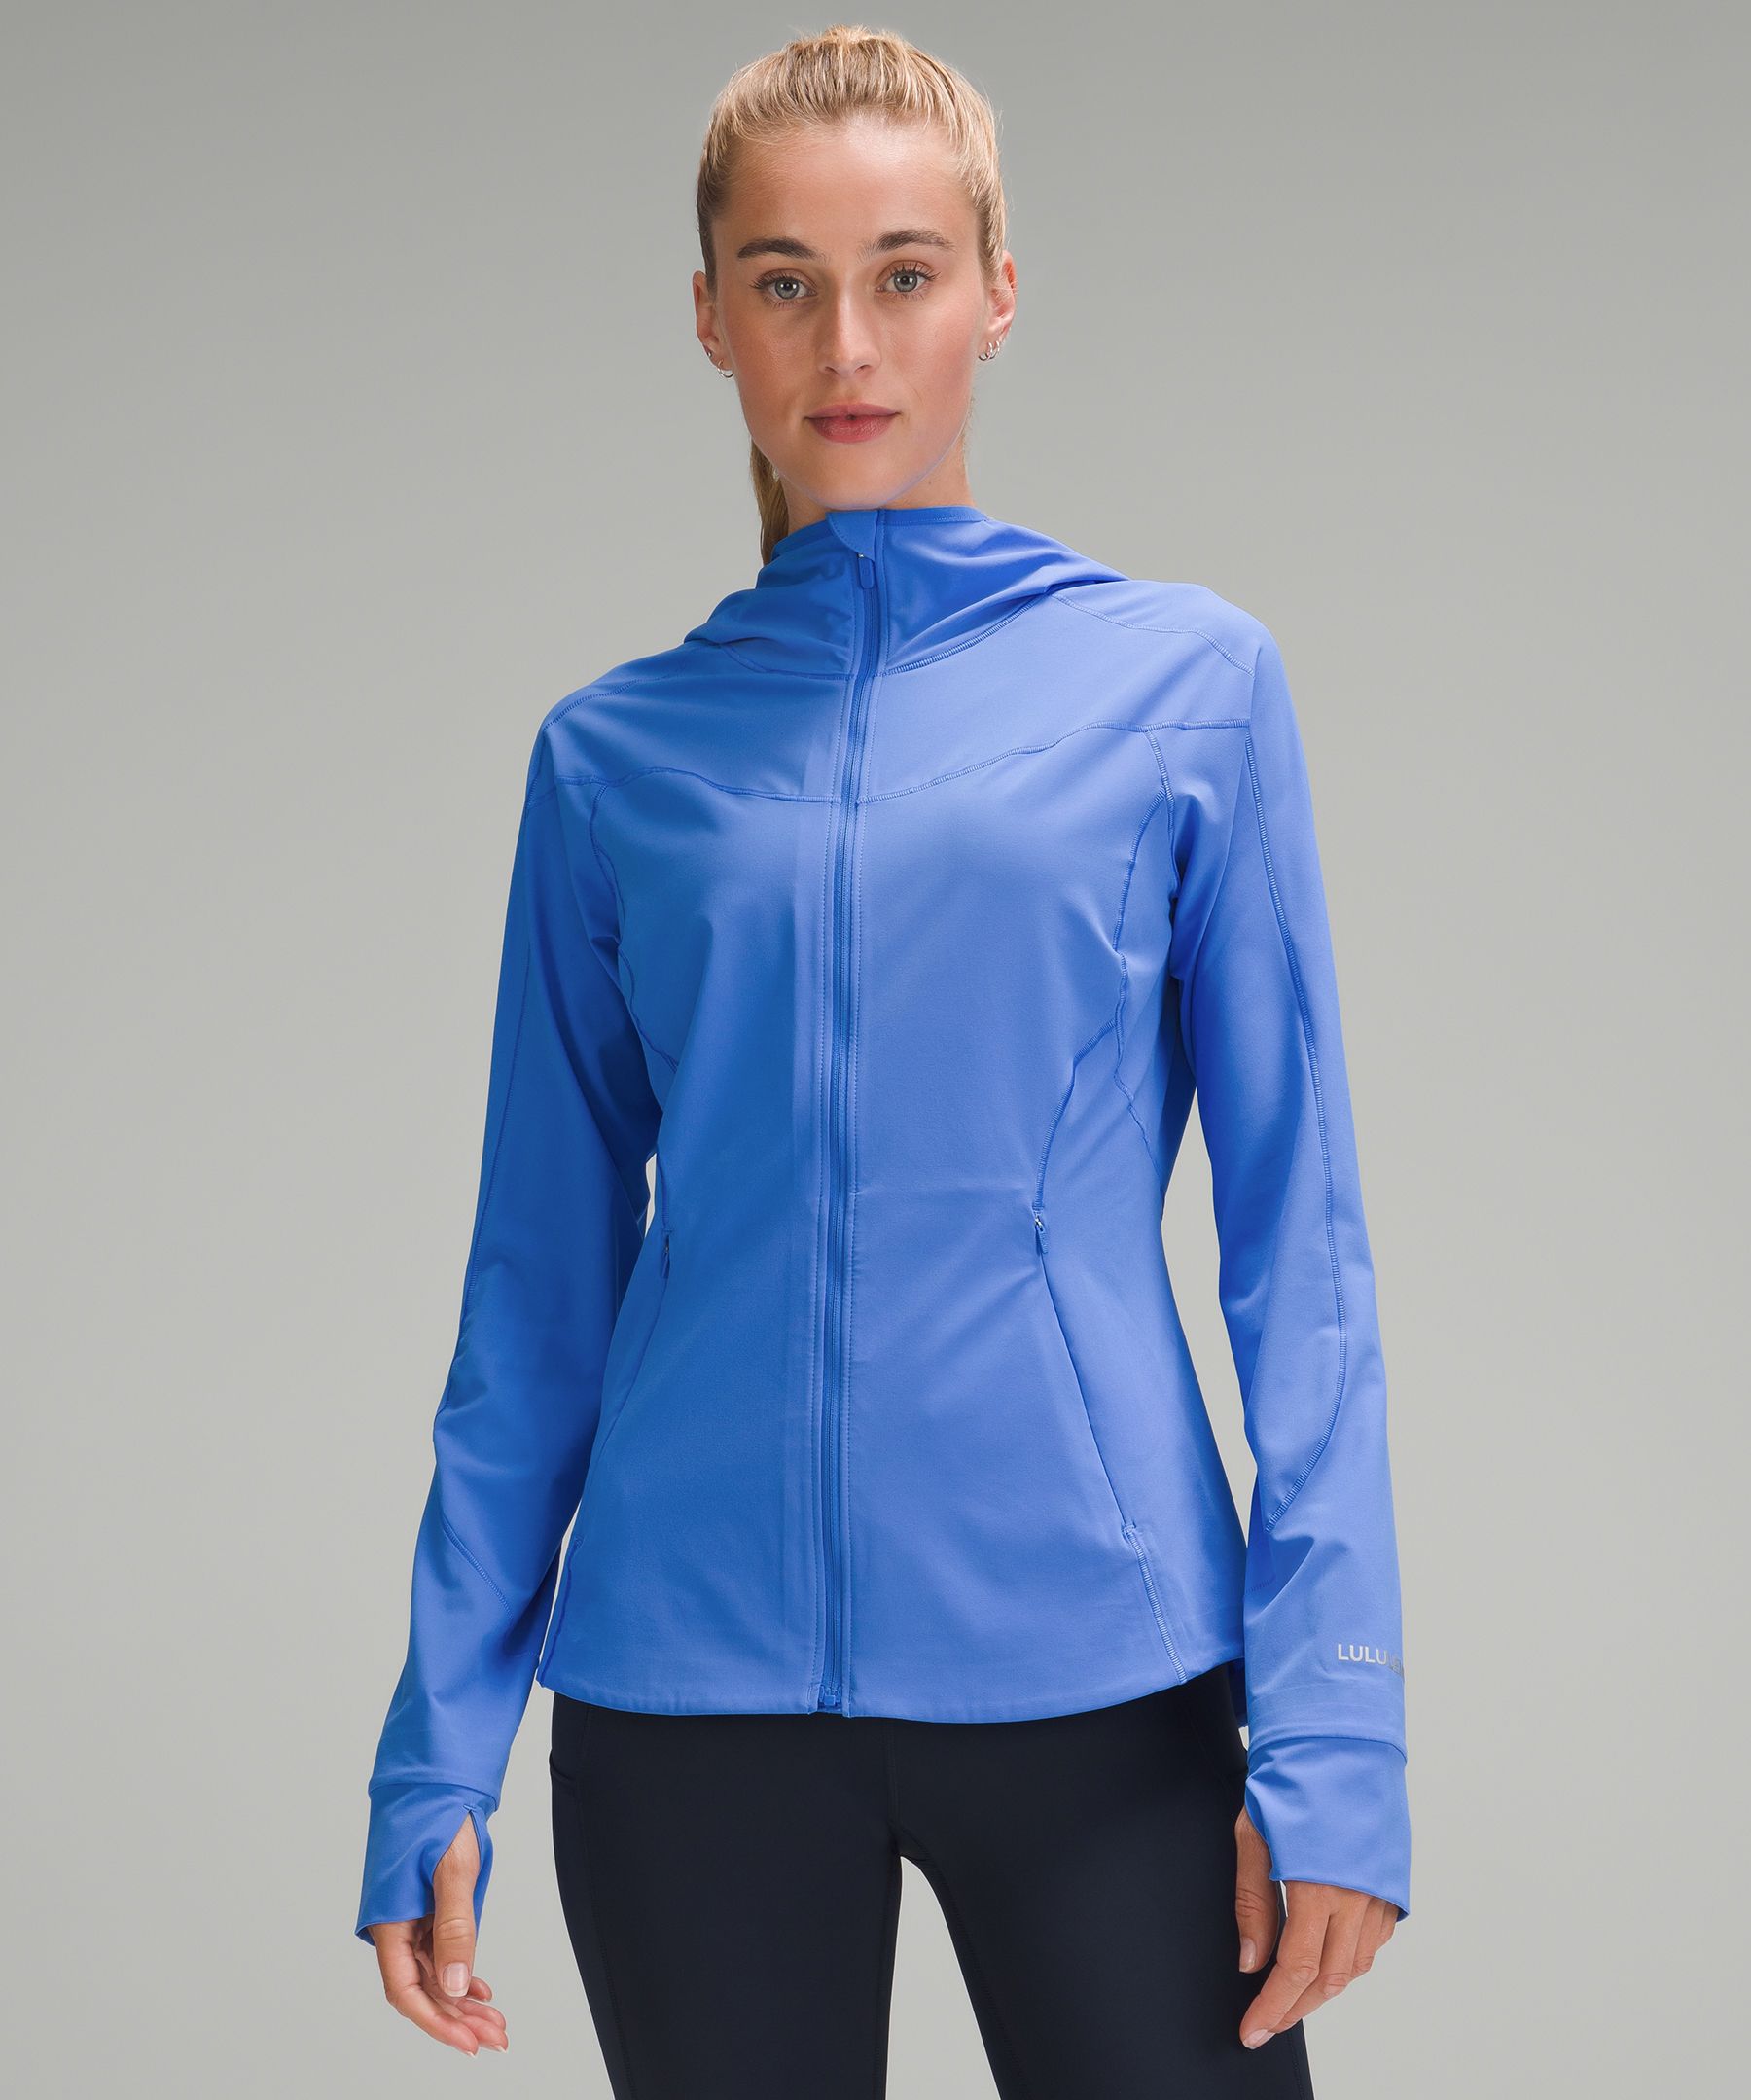 Lululemon wind break jacket - Athletic apparel